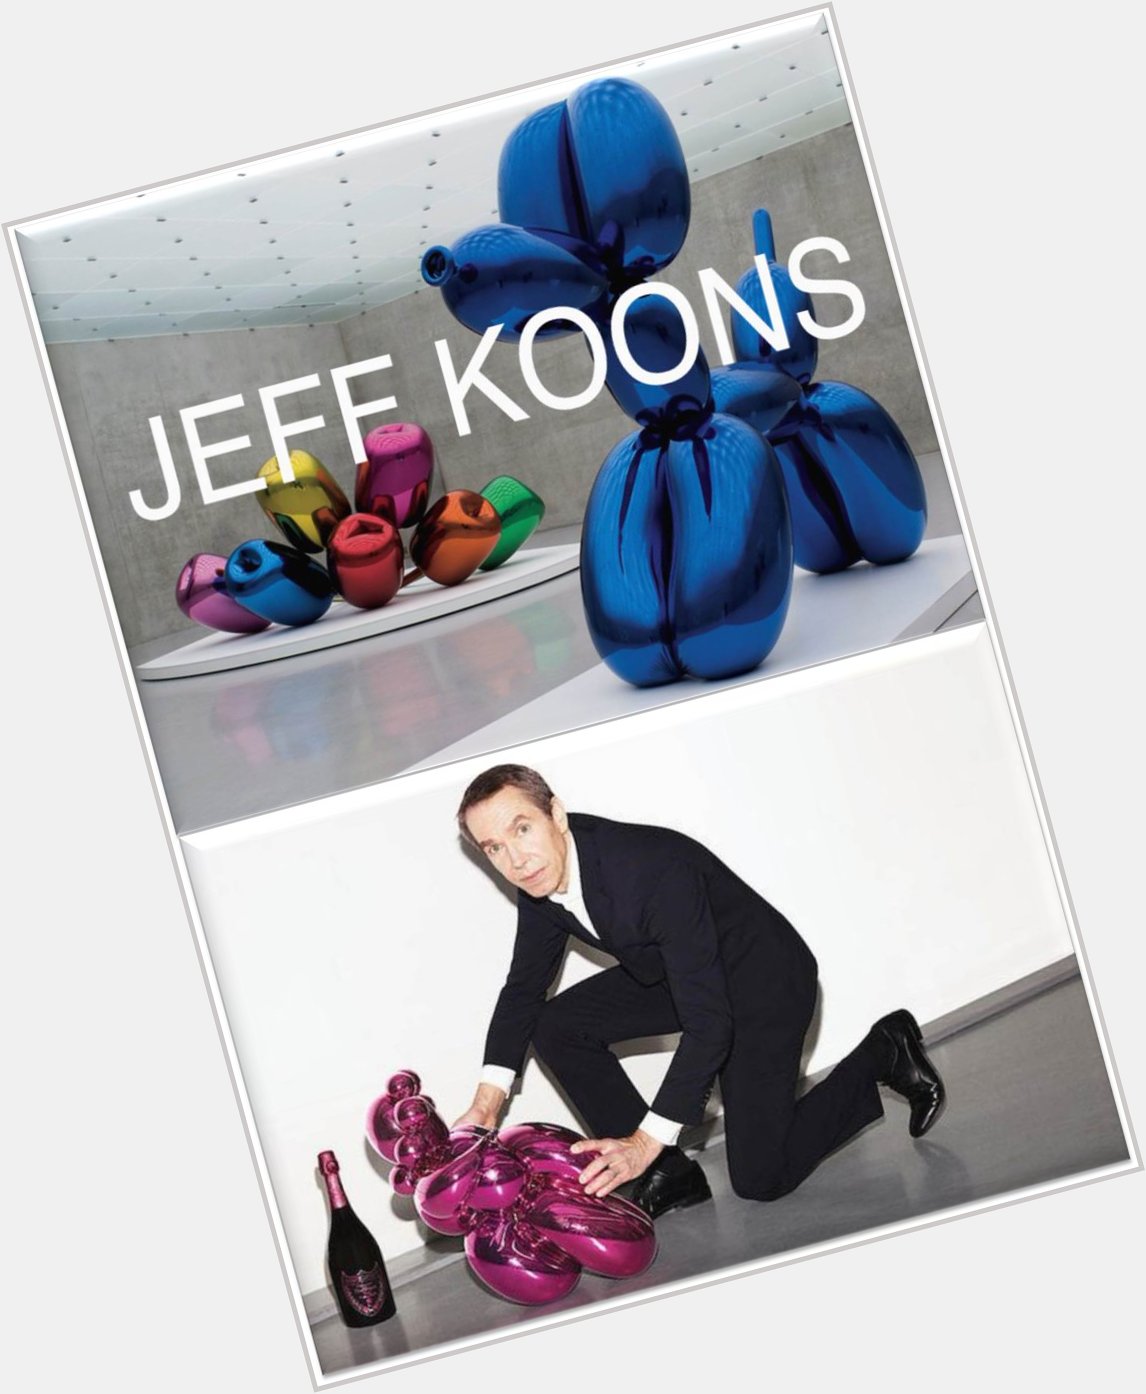 Happy Birthday Jeff Koons!  - The artist celebrates his 60th today. 